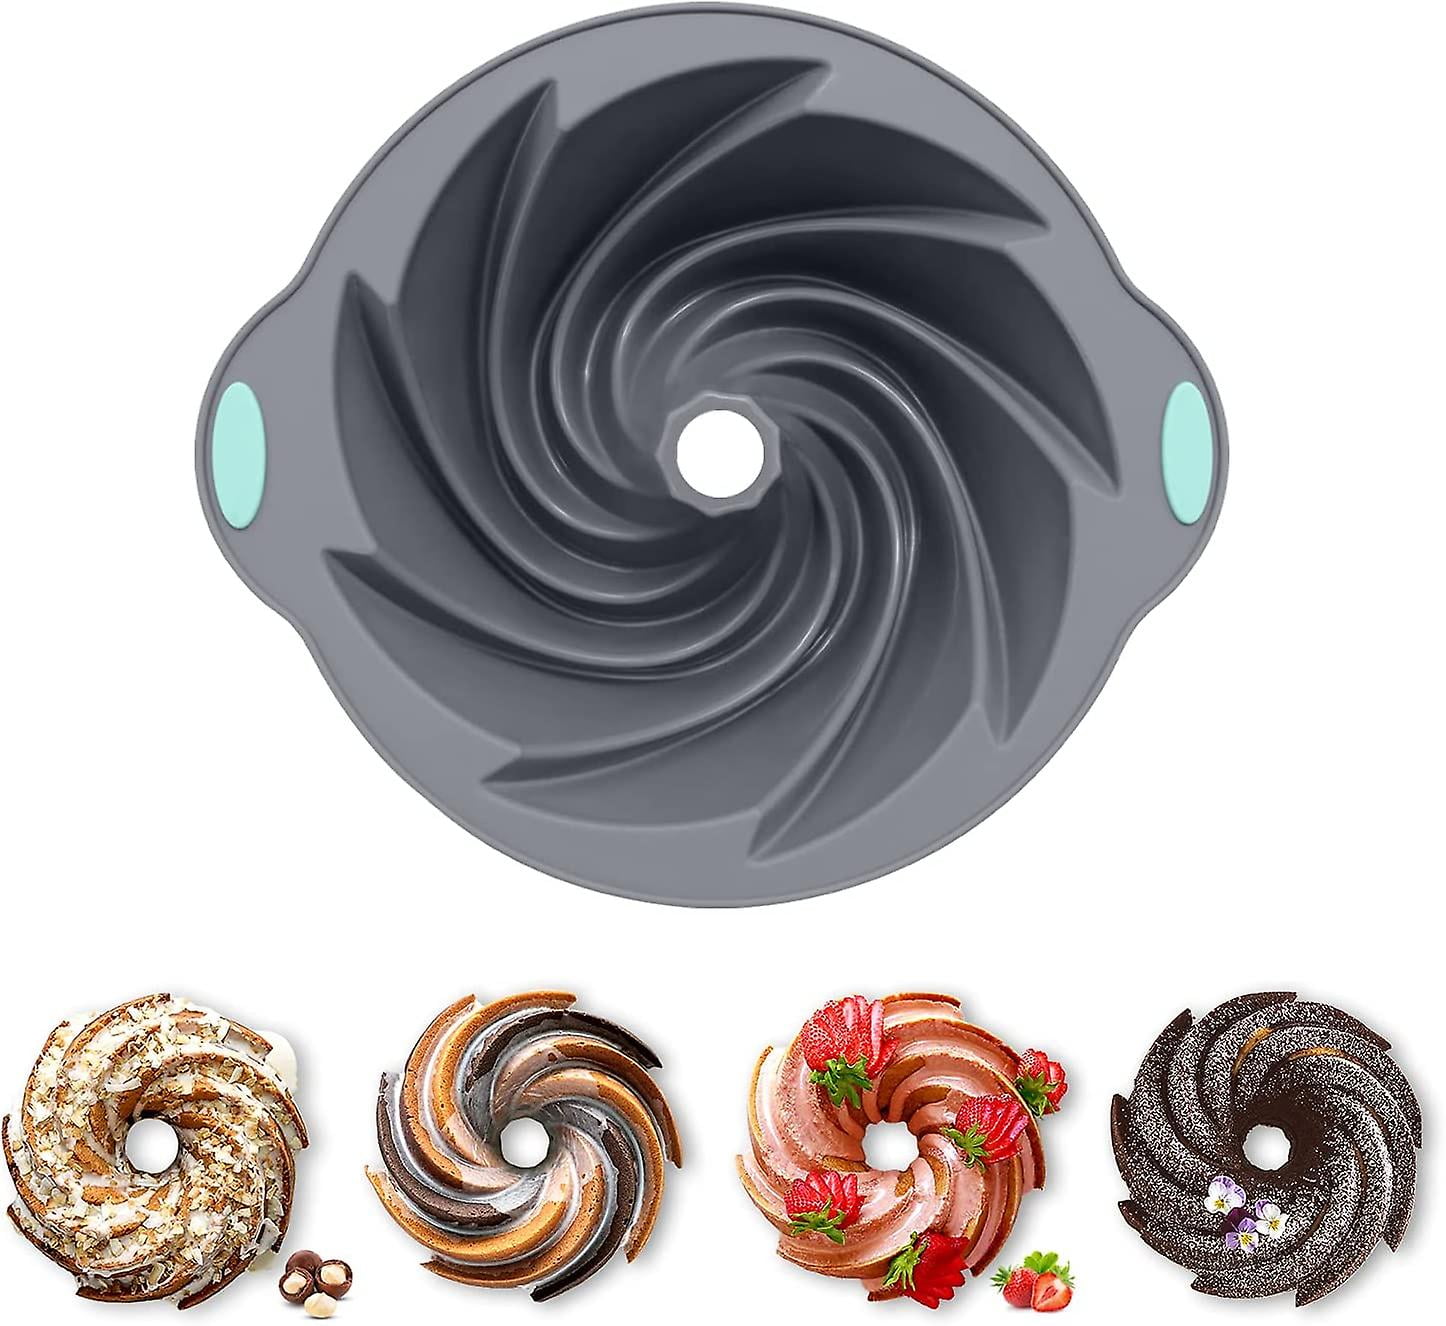 Silicone Cake Pan with Spiral Design, Food Grade Non-Stick